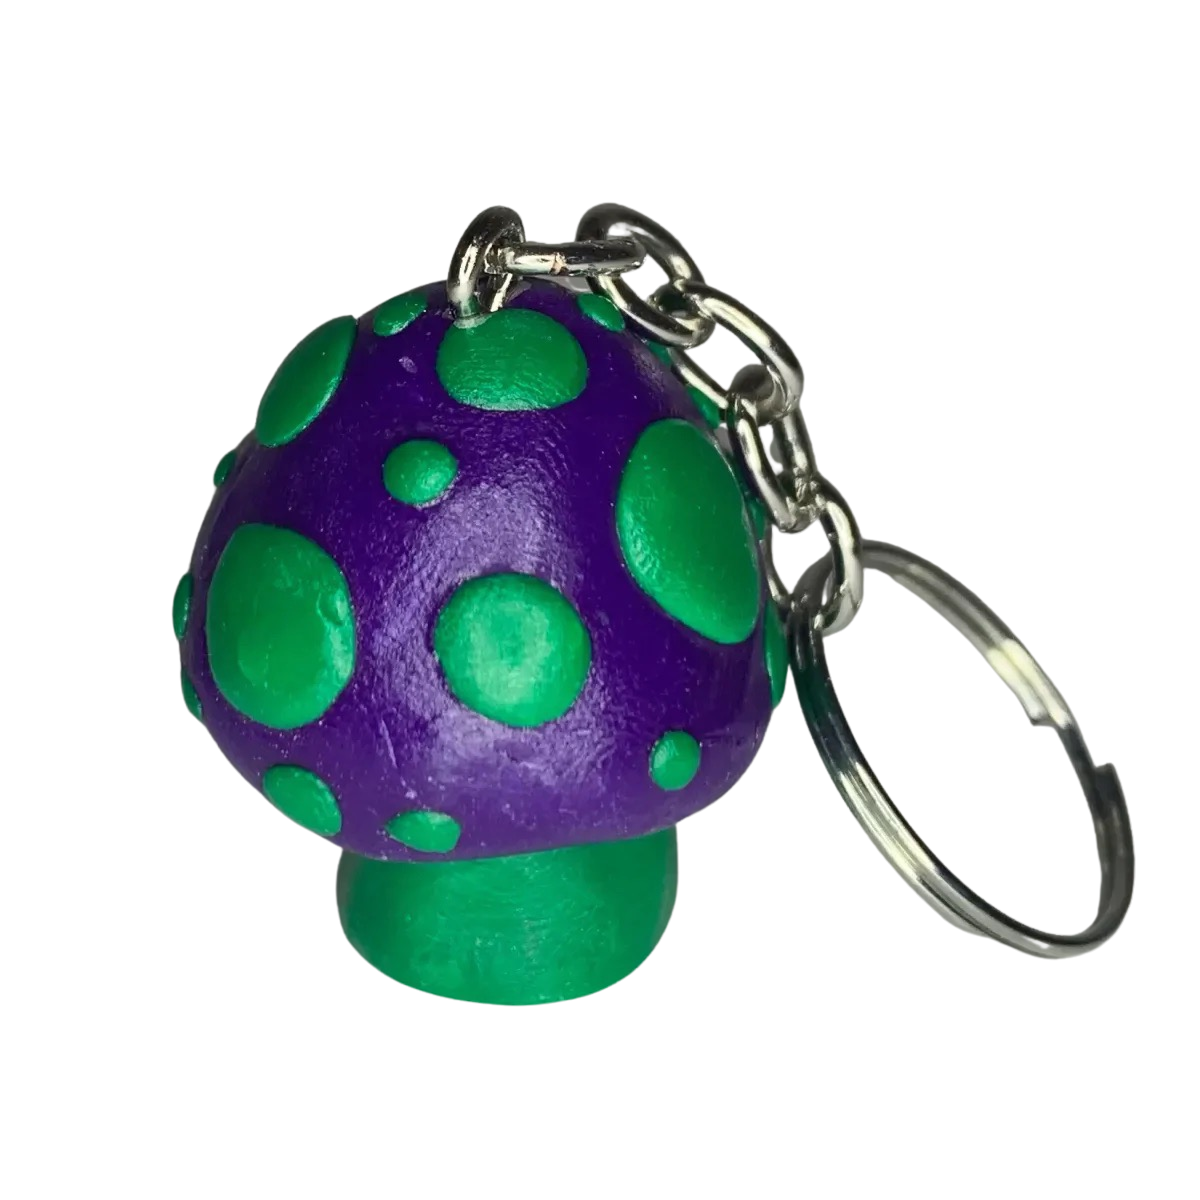 Dark Purple and Green Mushroom Keychains, cartoon, stylized, cute, school colors, team colors, wildcard